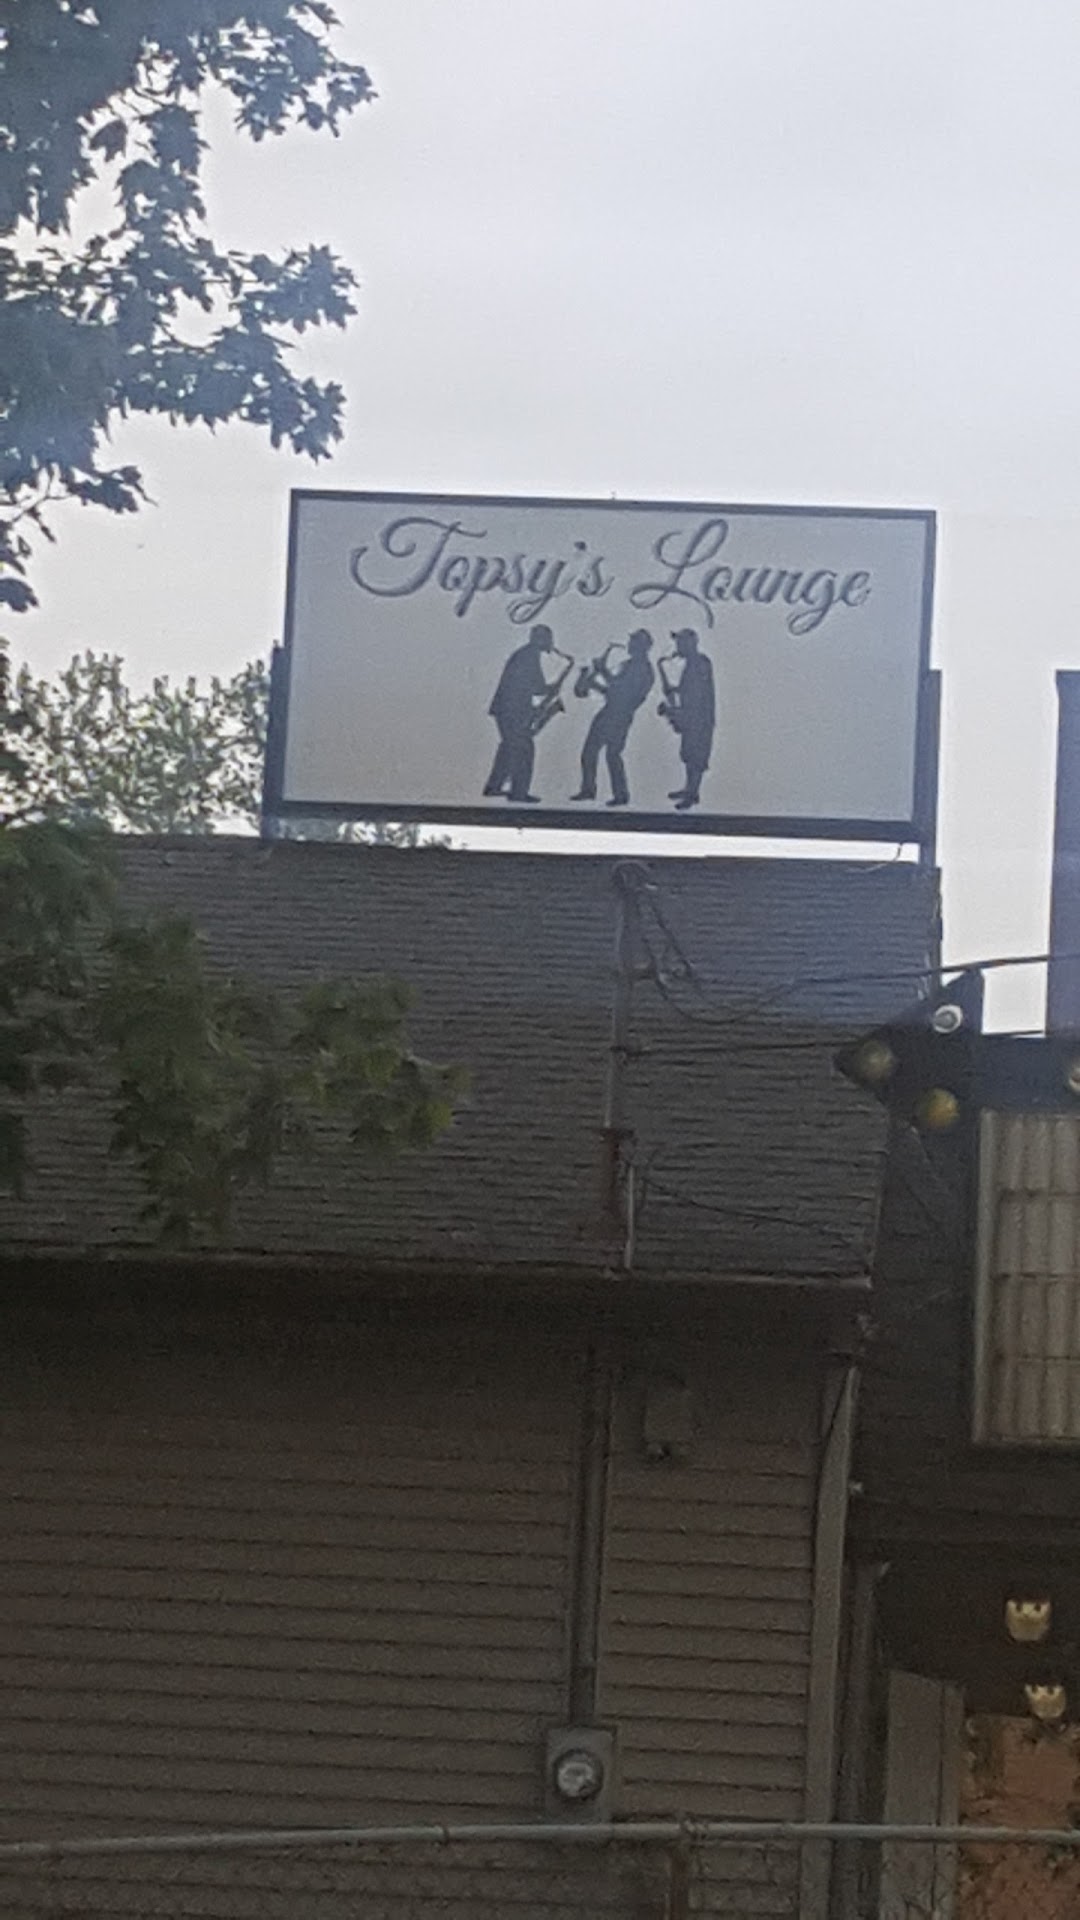 Topsys Lounge